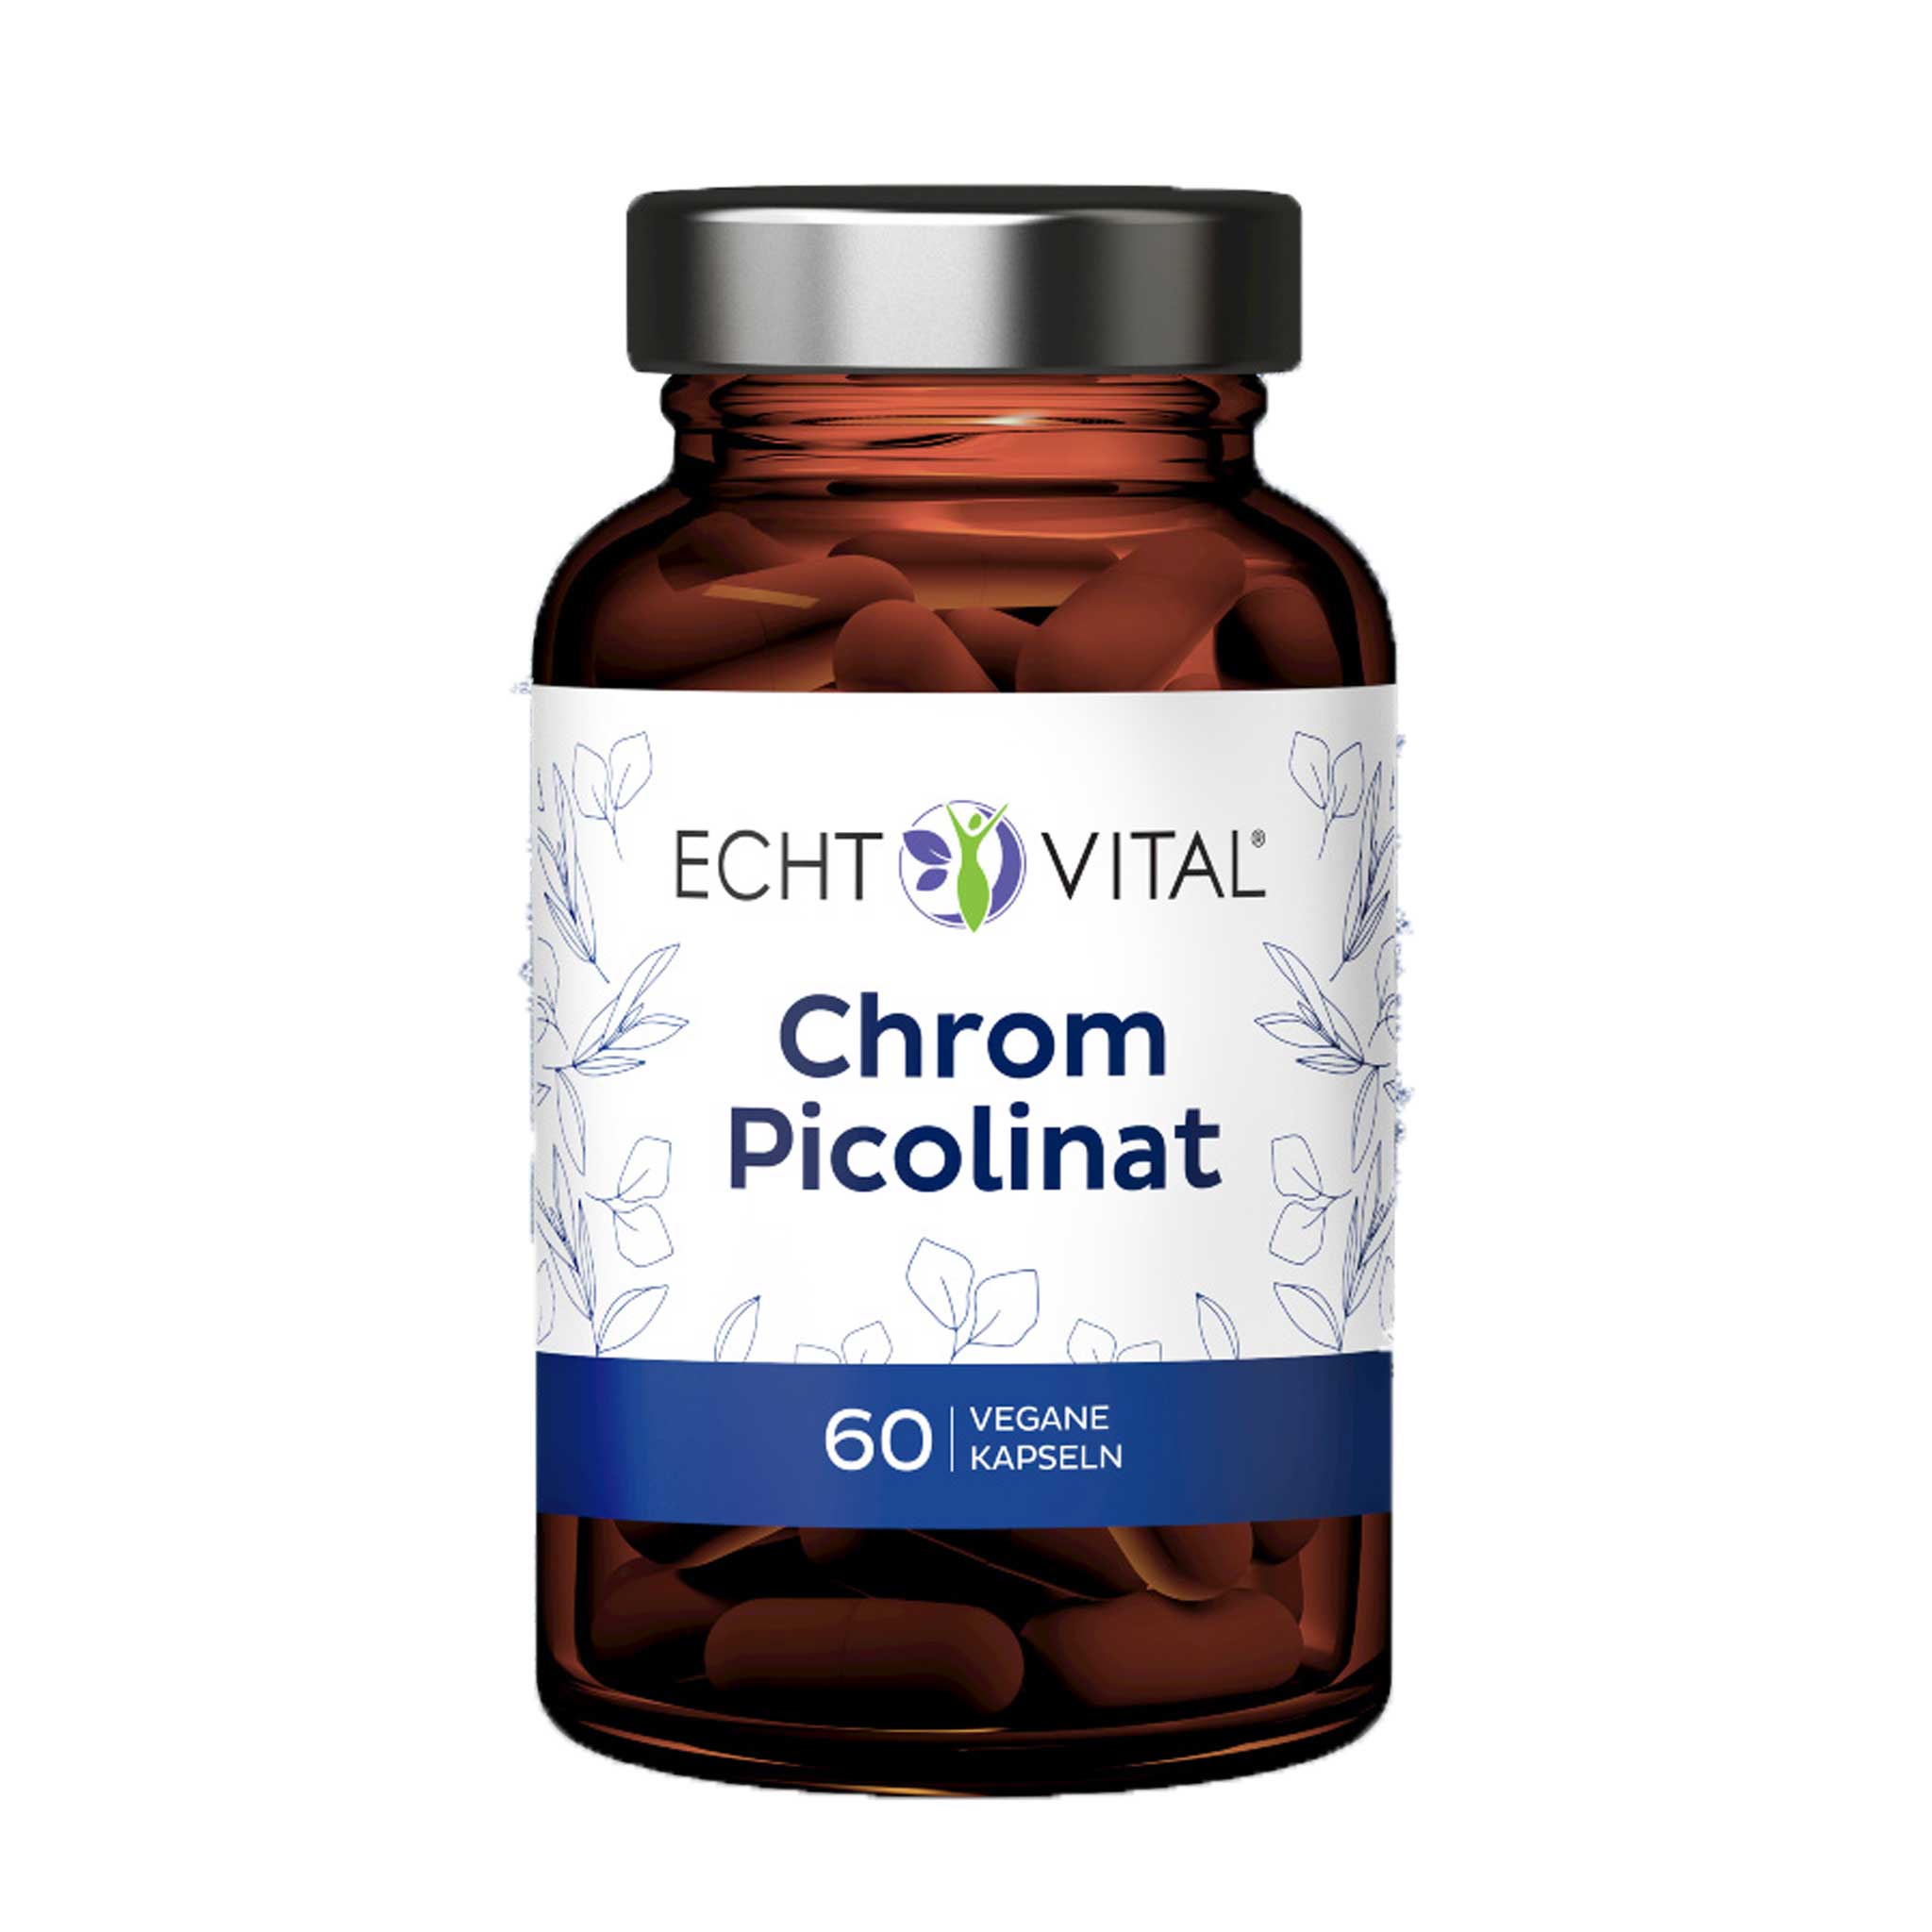 Chrom Picolinat von Echt Vital beinhaltet 60 vegane Kapseln